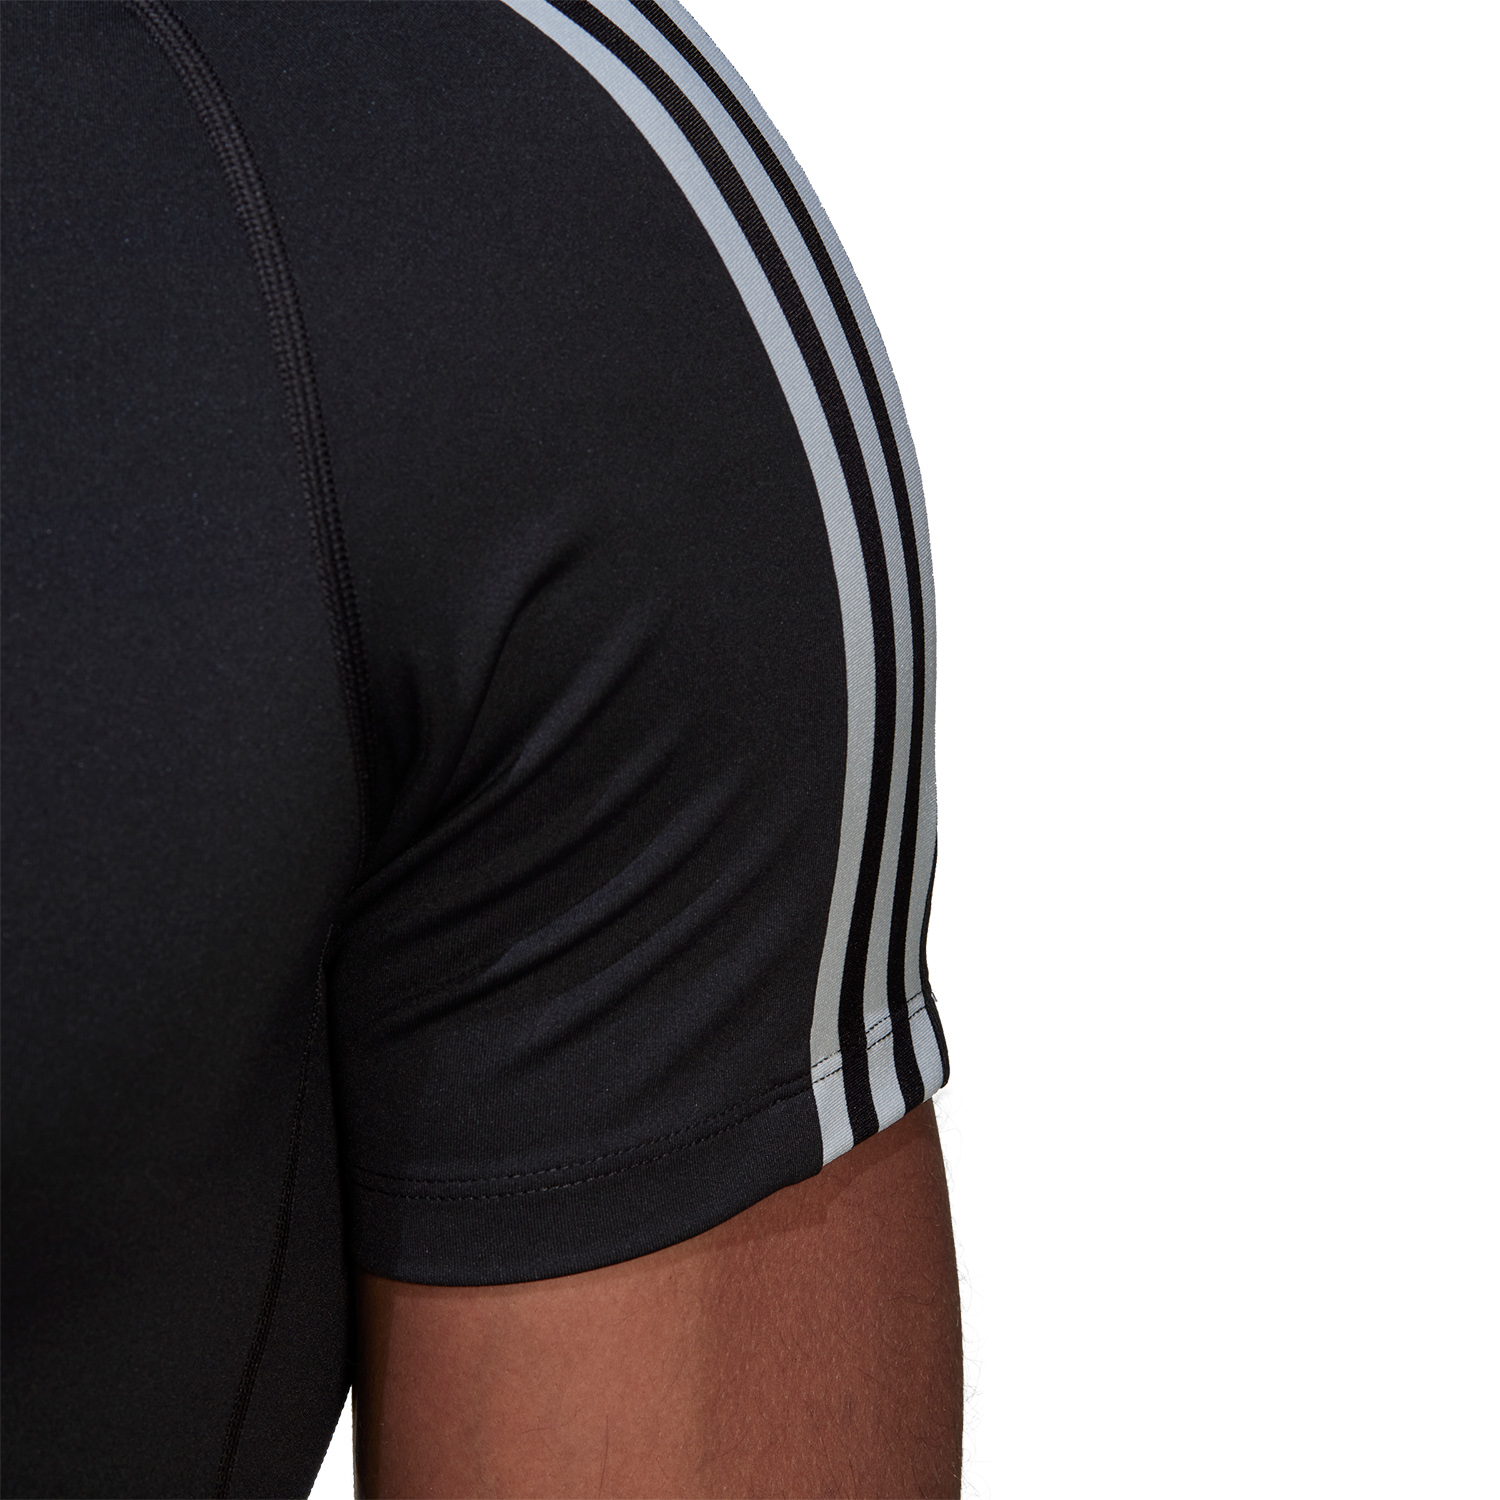 adidas 3 Stripes AEROREADY T-Shirt - Black